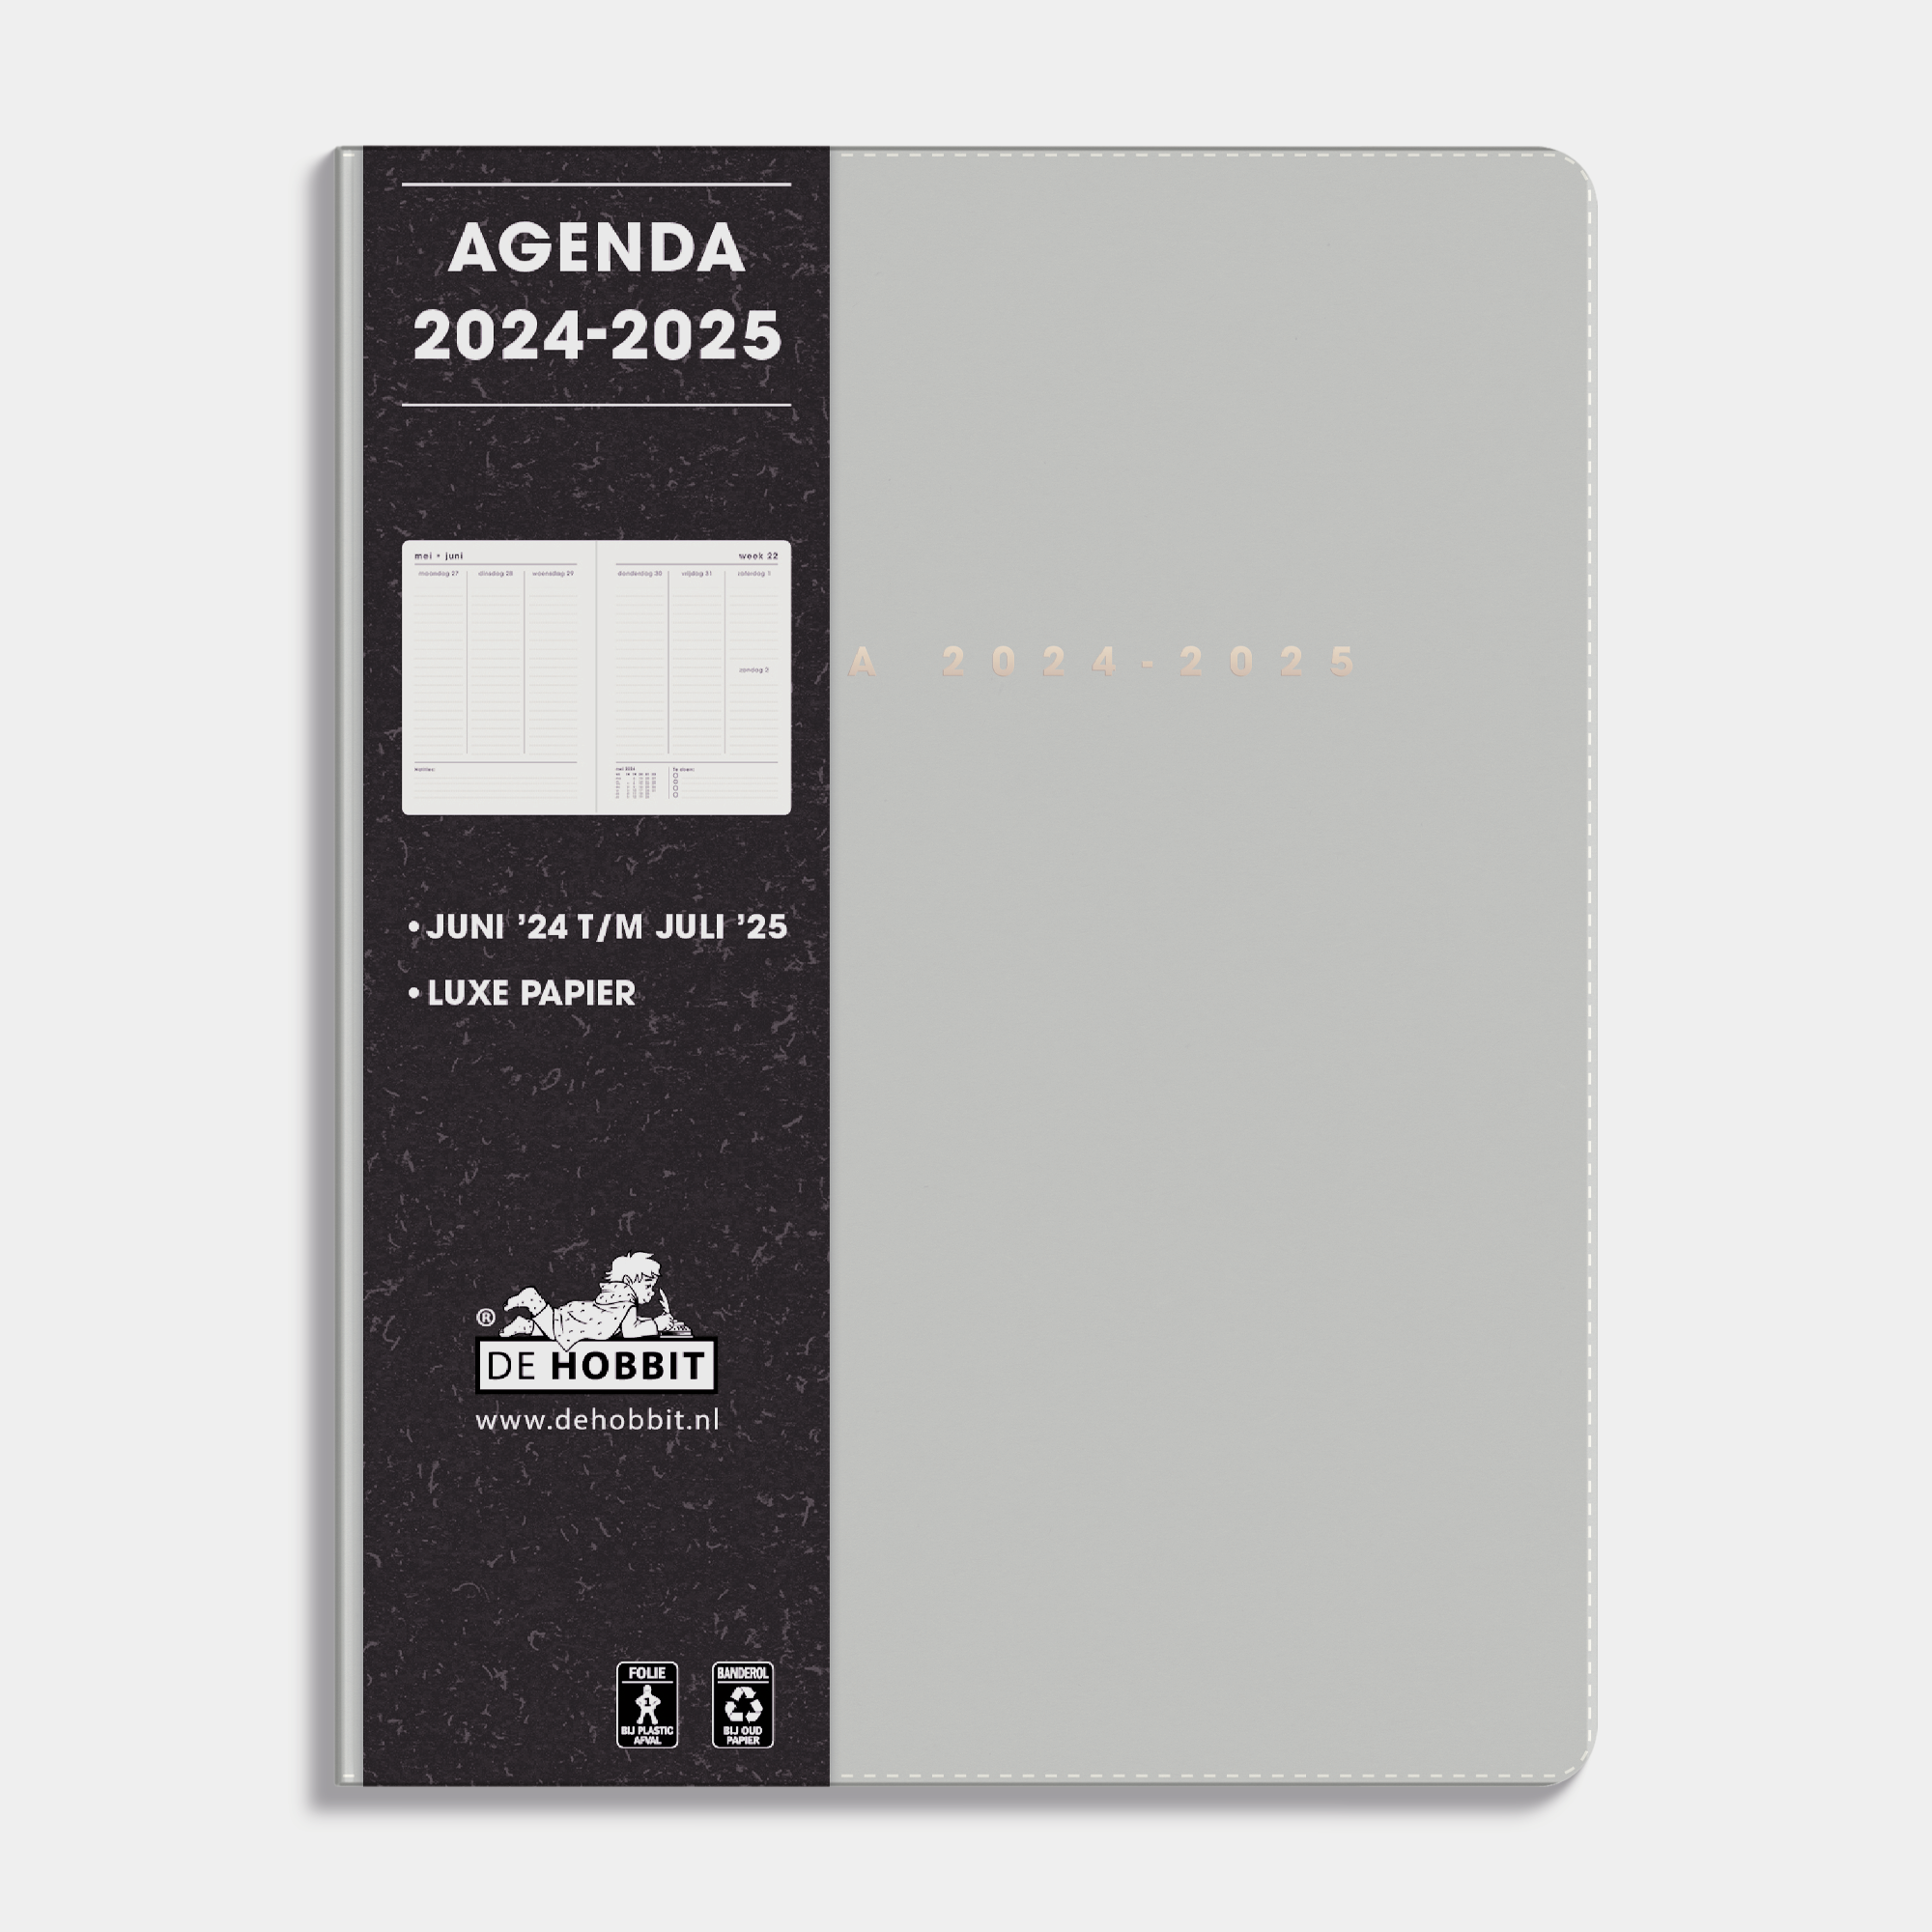 AGENDA 2024-2025 A5 WASHED CRAFT